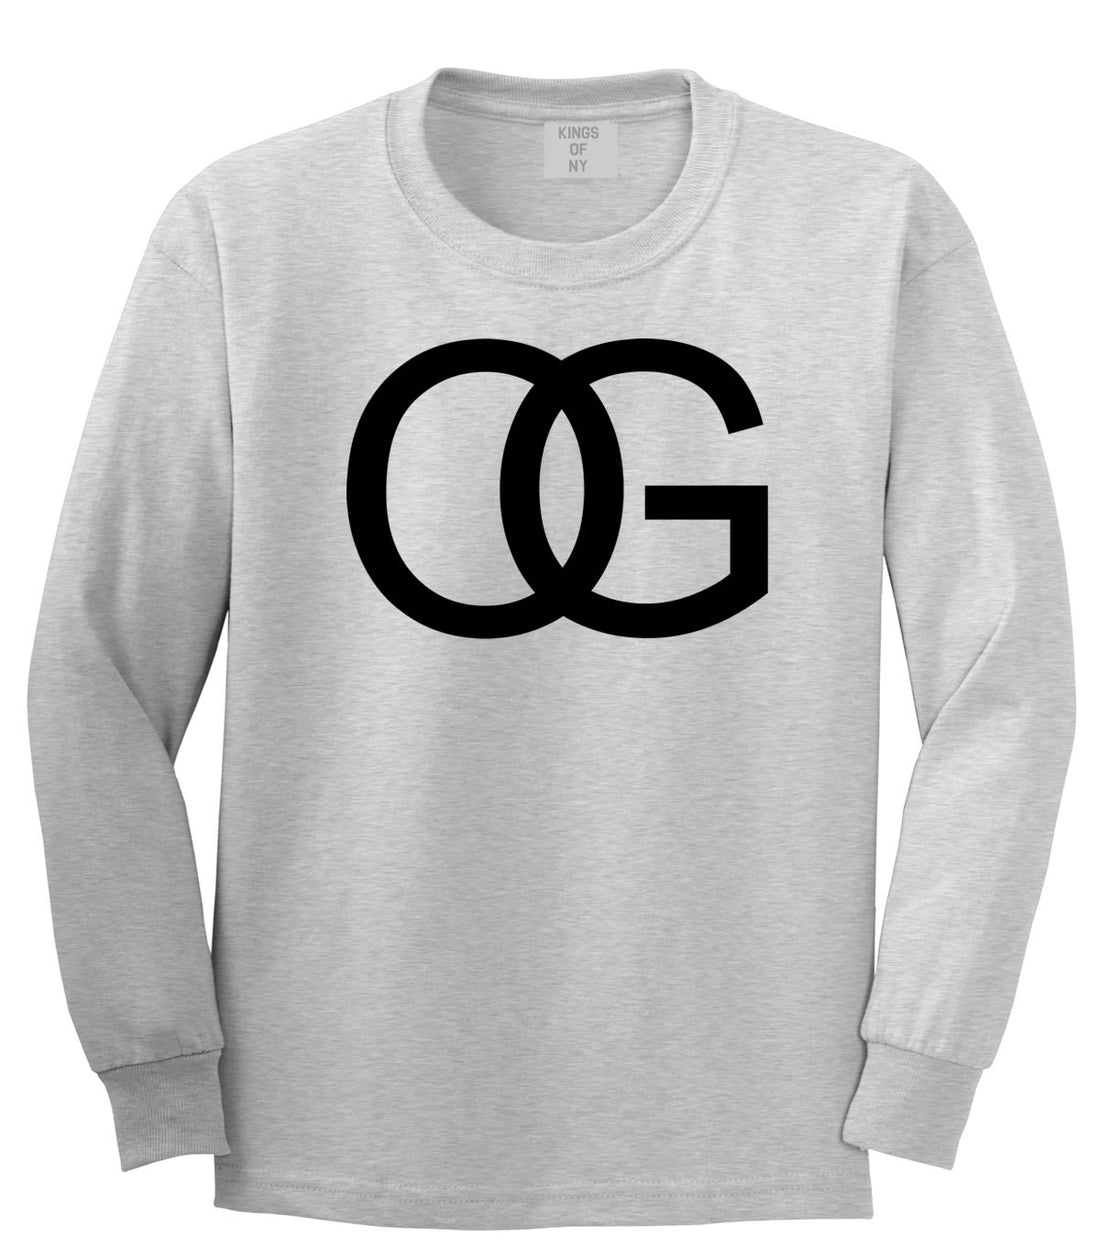 OG Original Gangsta Gangster Style Green Long Sleeve Boys Kids T-Shirt In Grey by Kings Of NY